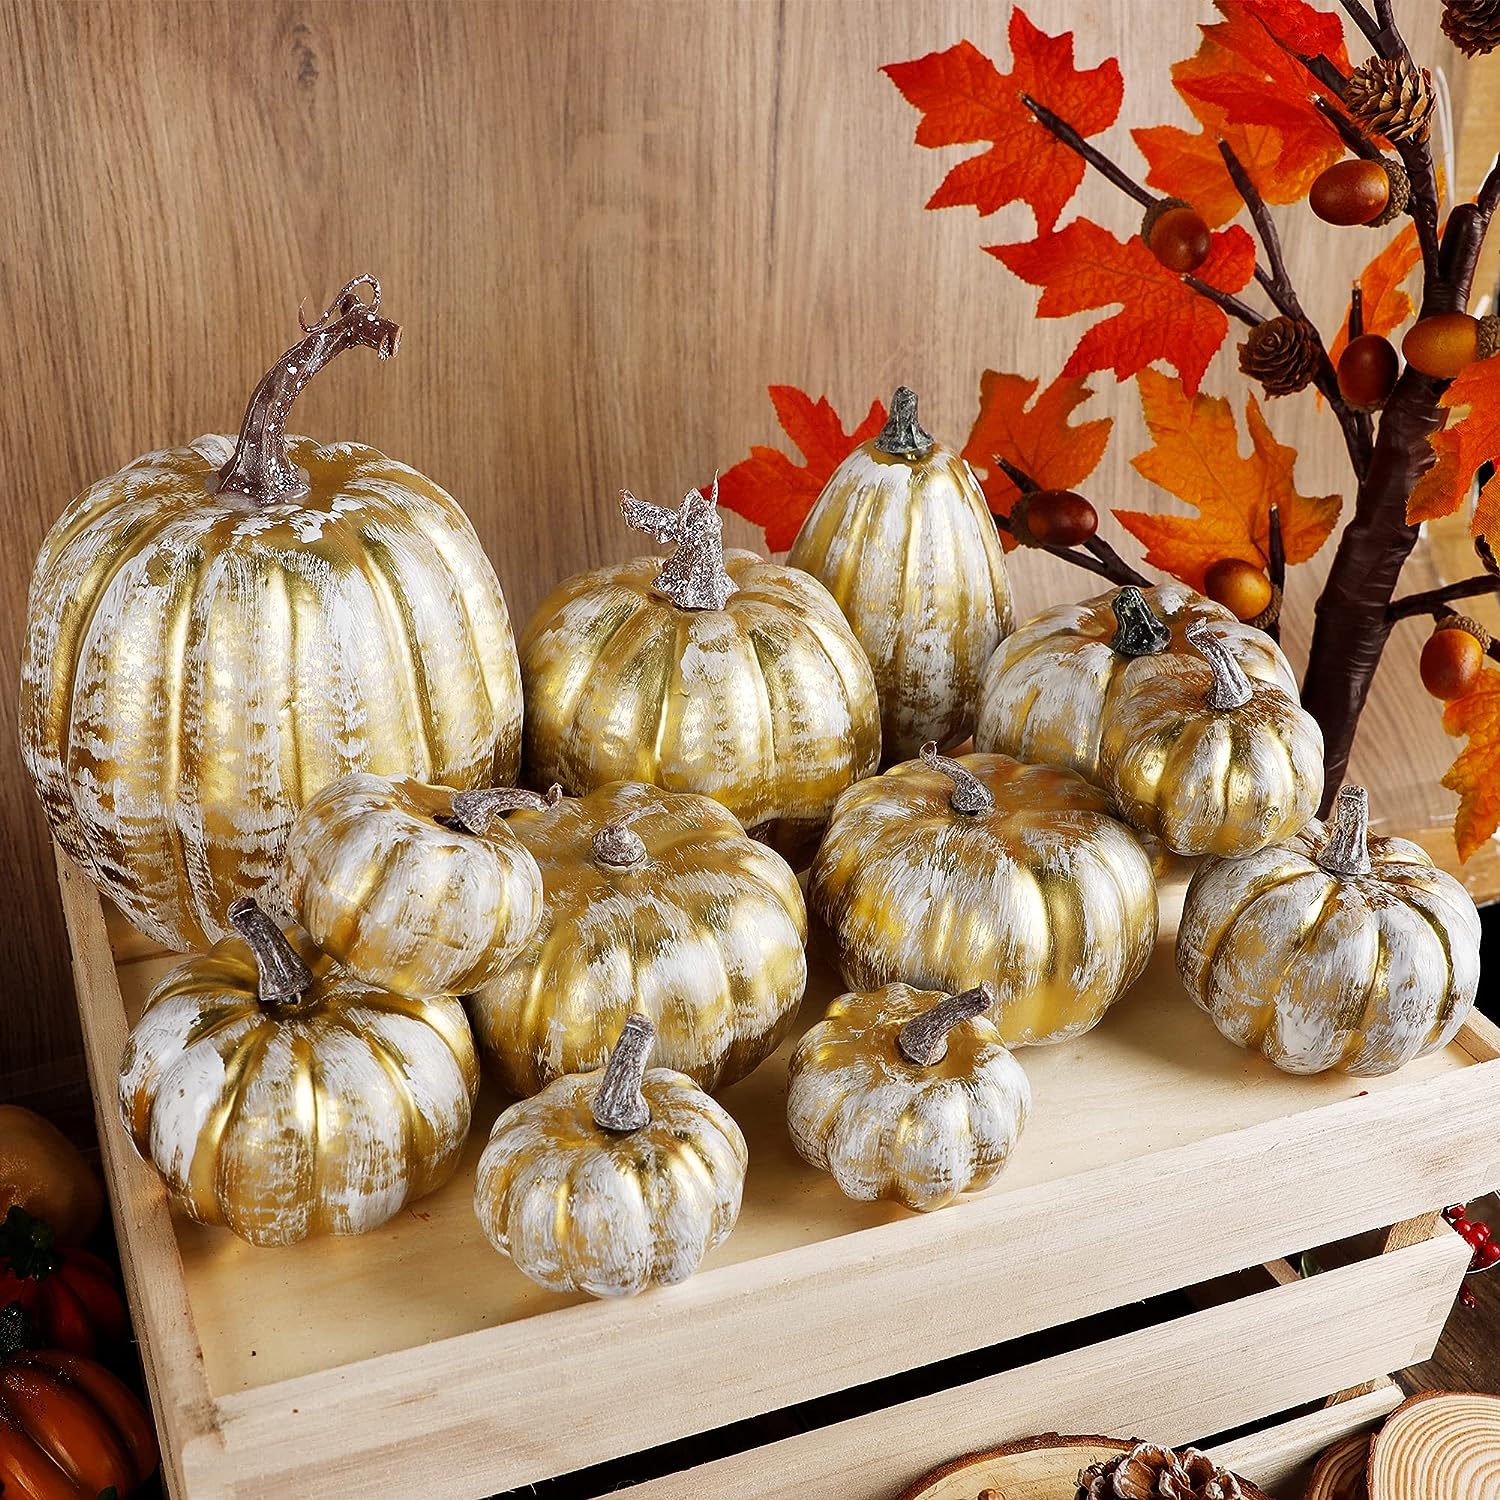 The Best Halloween Decorations Include Gold Pumpkins